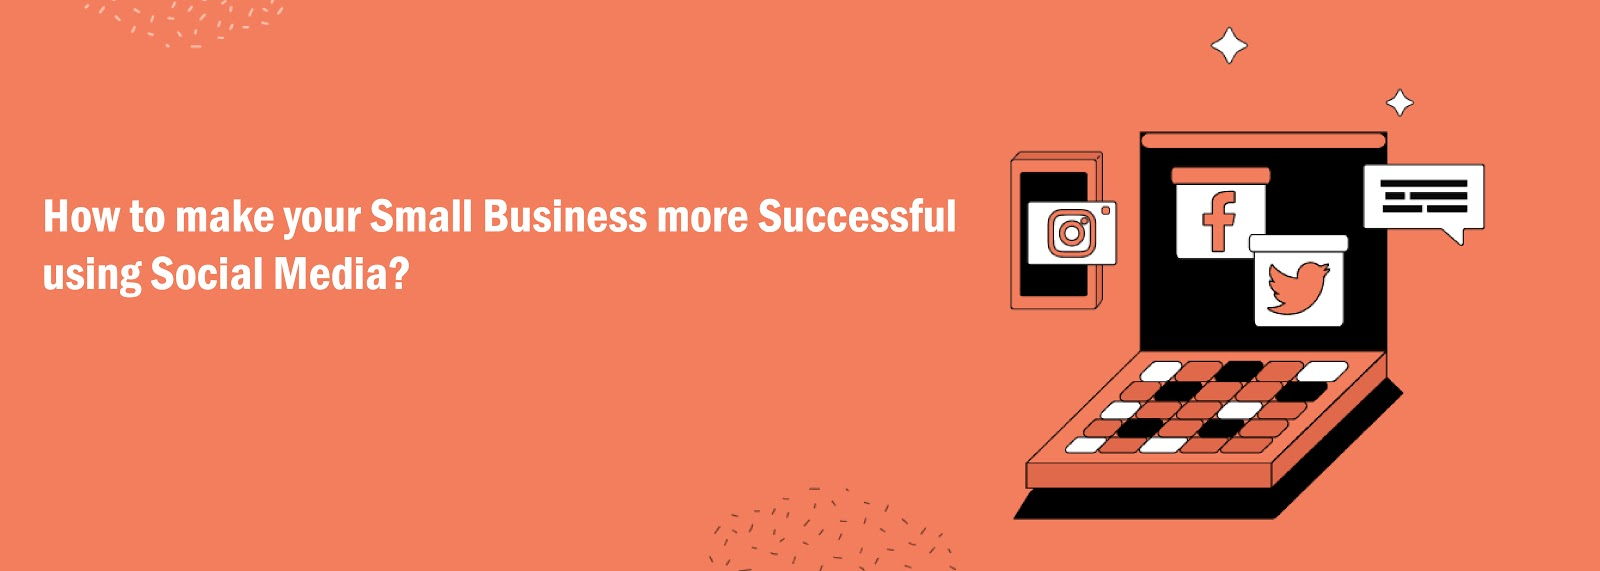 Make Small Business more Successful using Social Media?